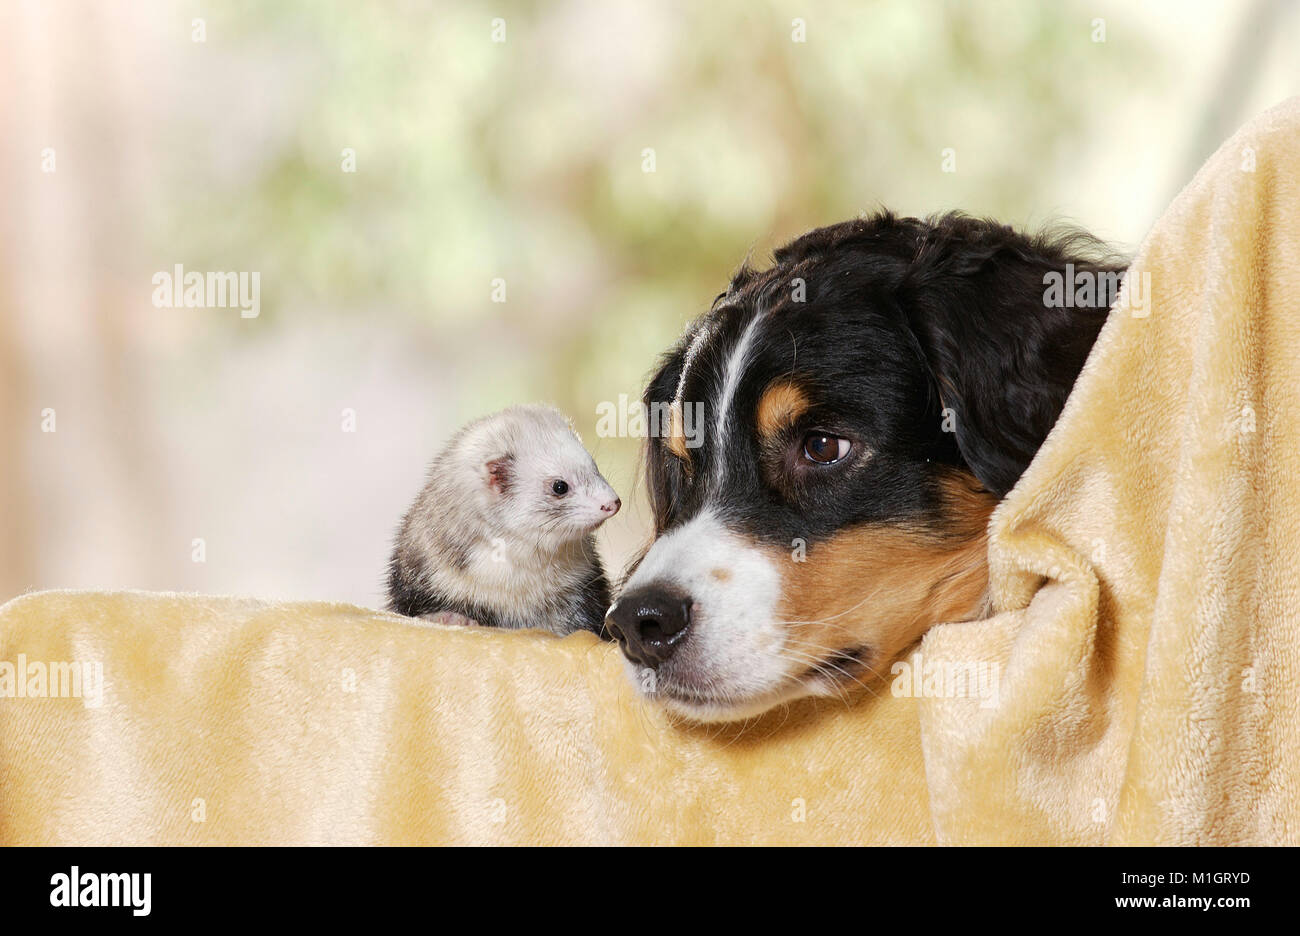 Animal friendship: Australian Shepherd and Ferret (Mustela putorius furo) on a blanket Stock Photo